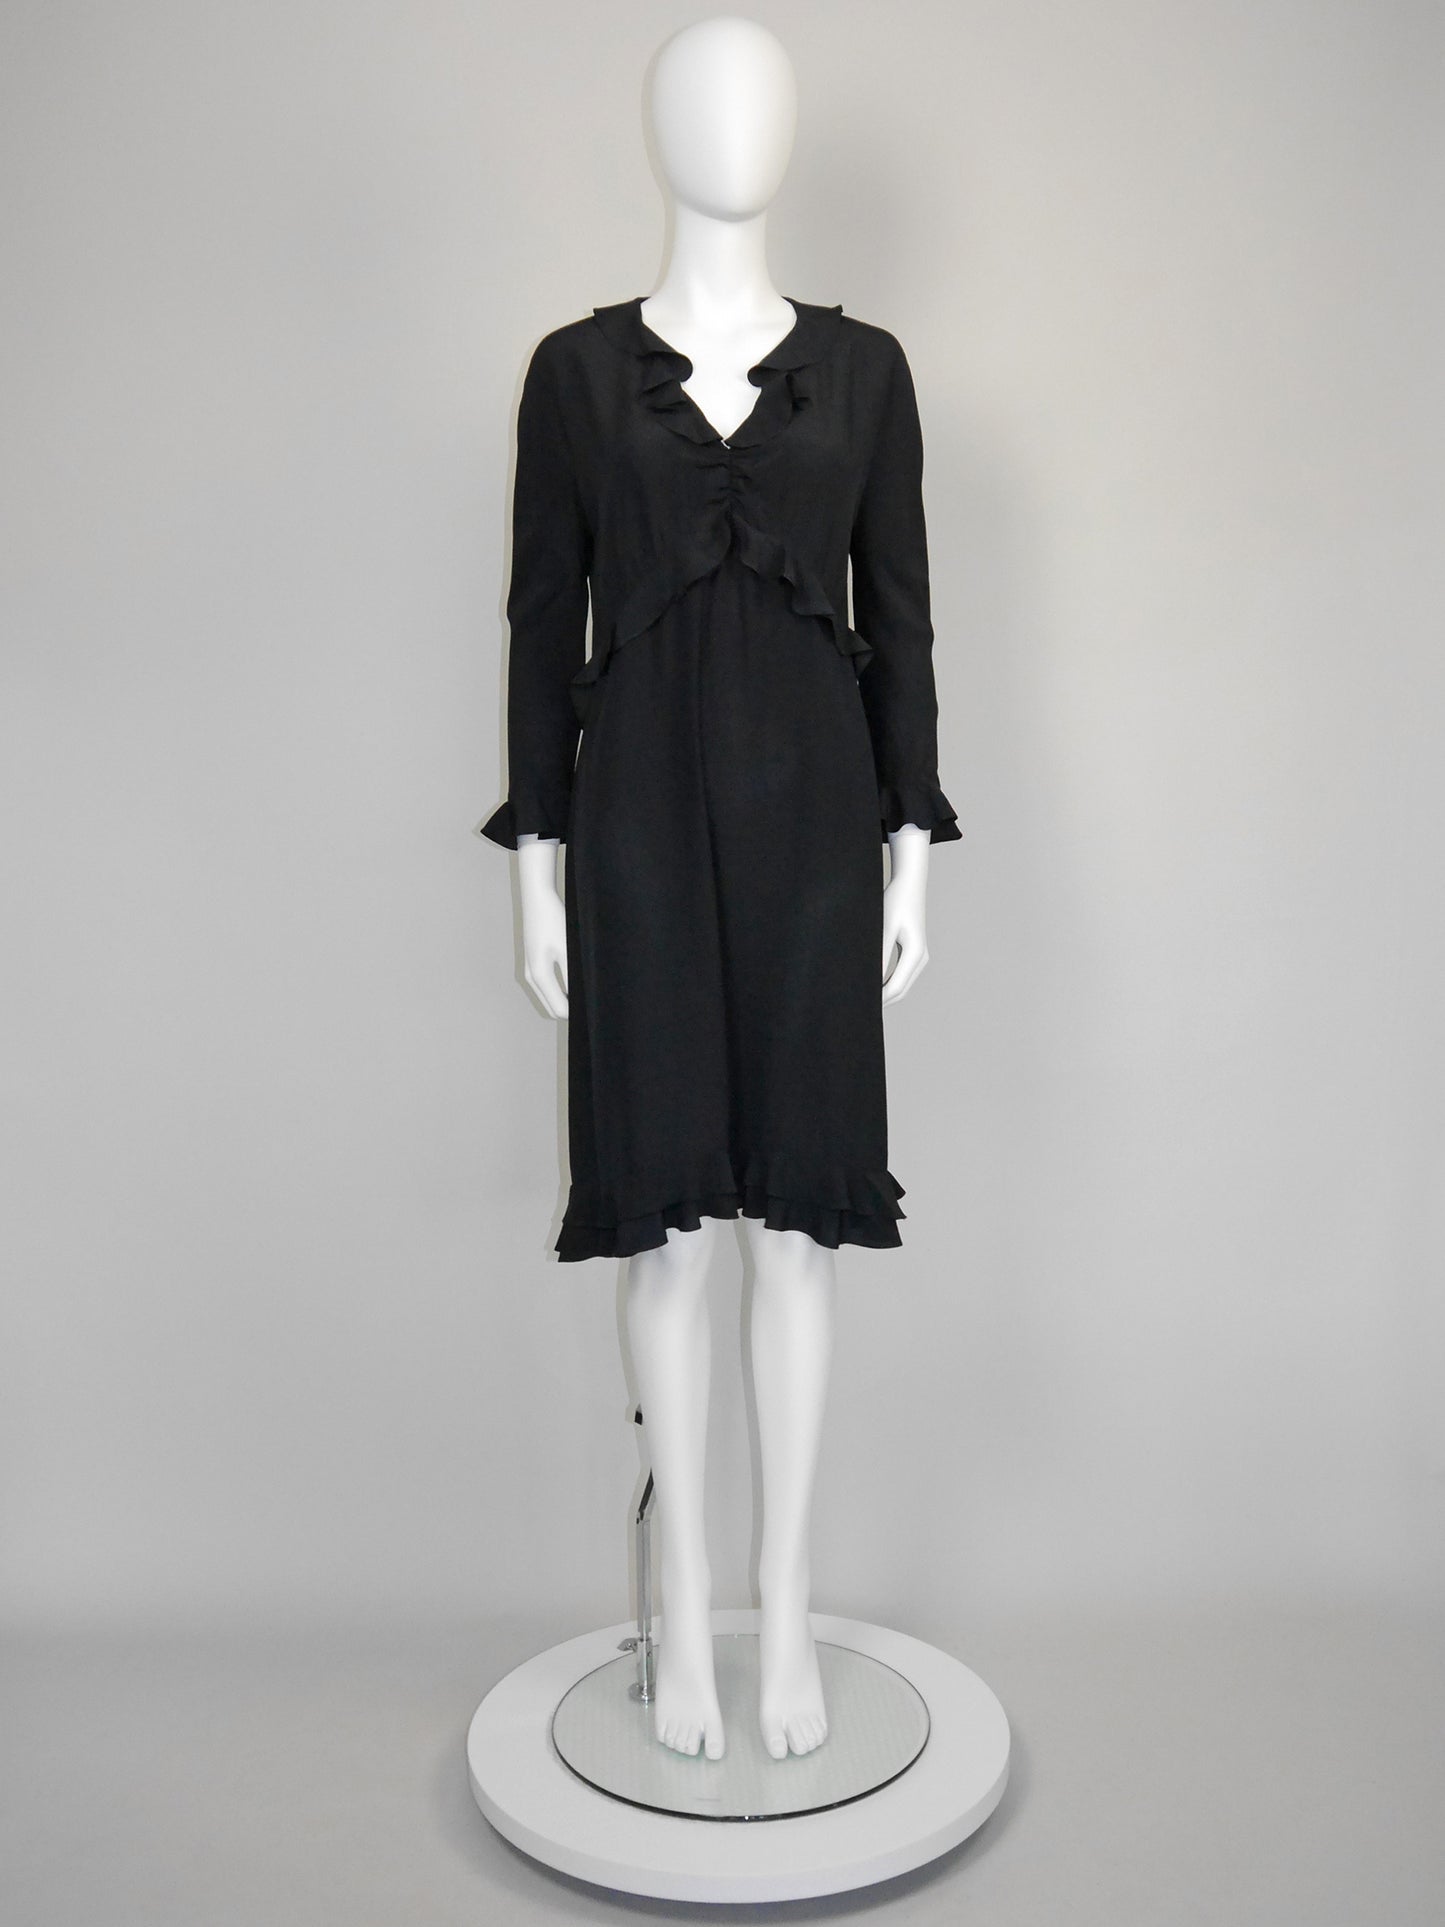 GUCCI by Tom Ford Spring 1999 Vintage Black Silk Ruffled Dress Opening Runway Look